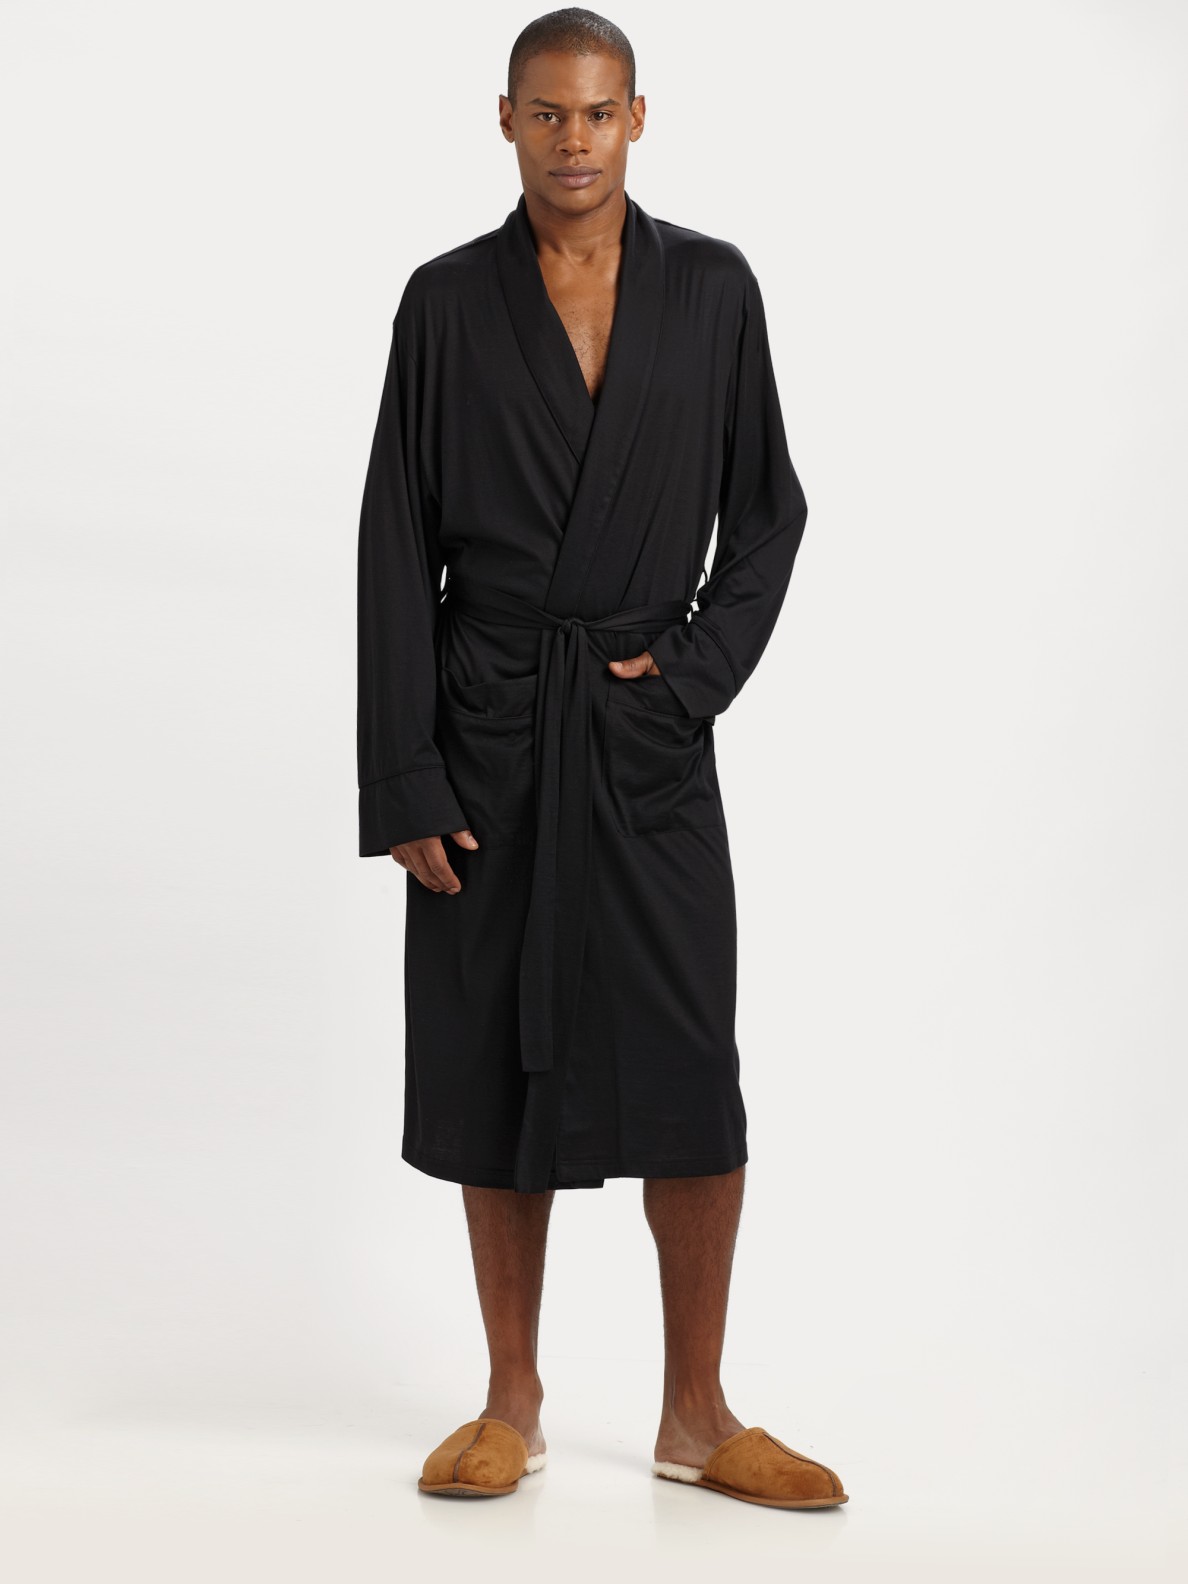 American essentials Silk/cotton Robe in Black for Men | Lyst